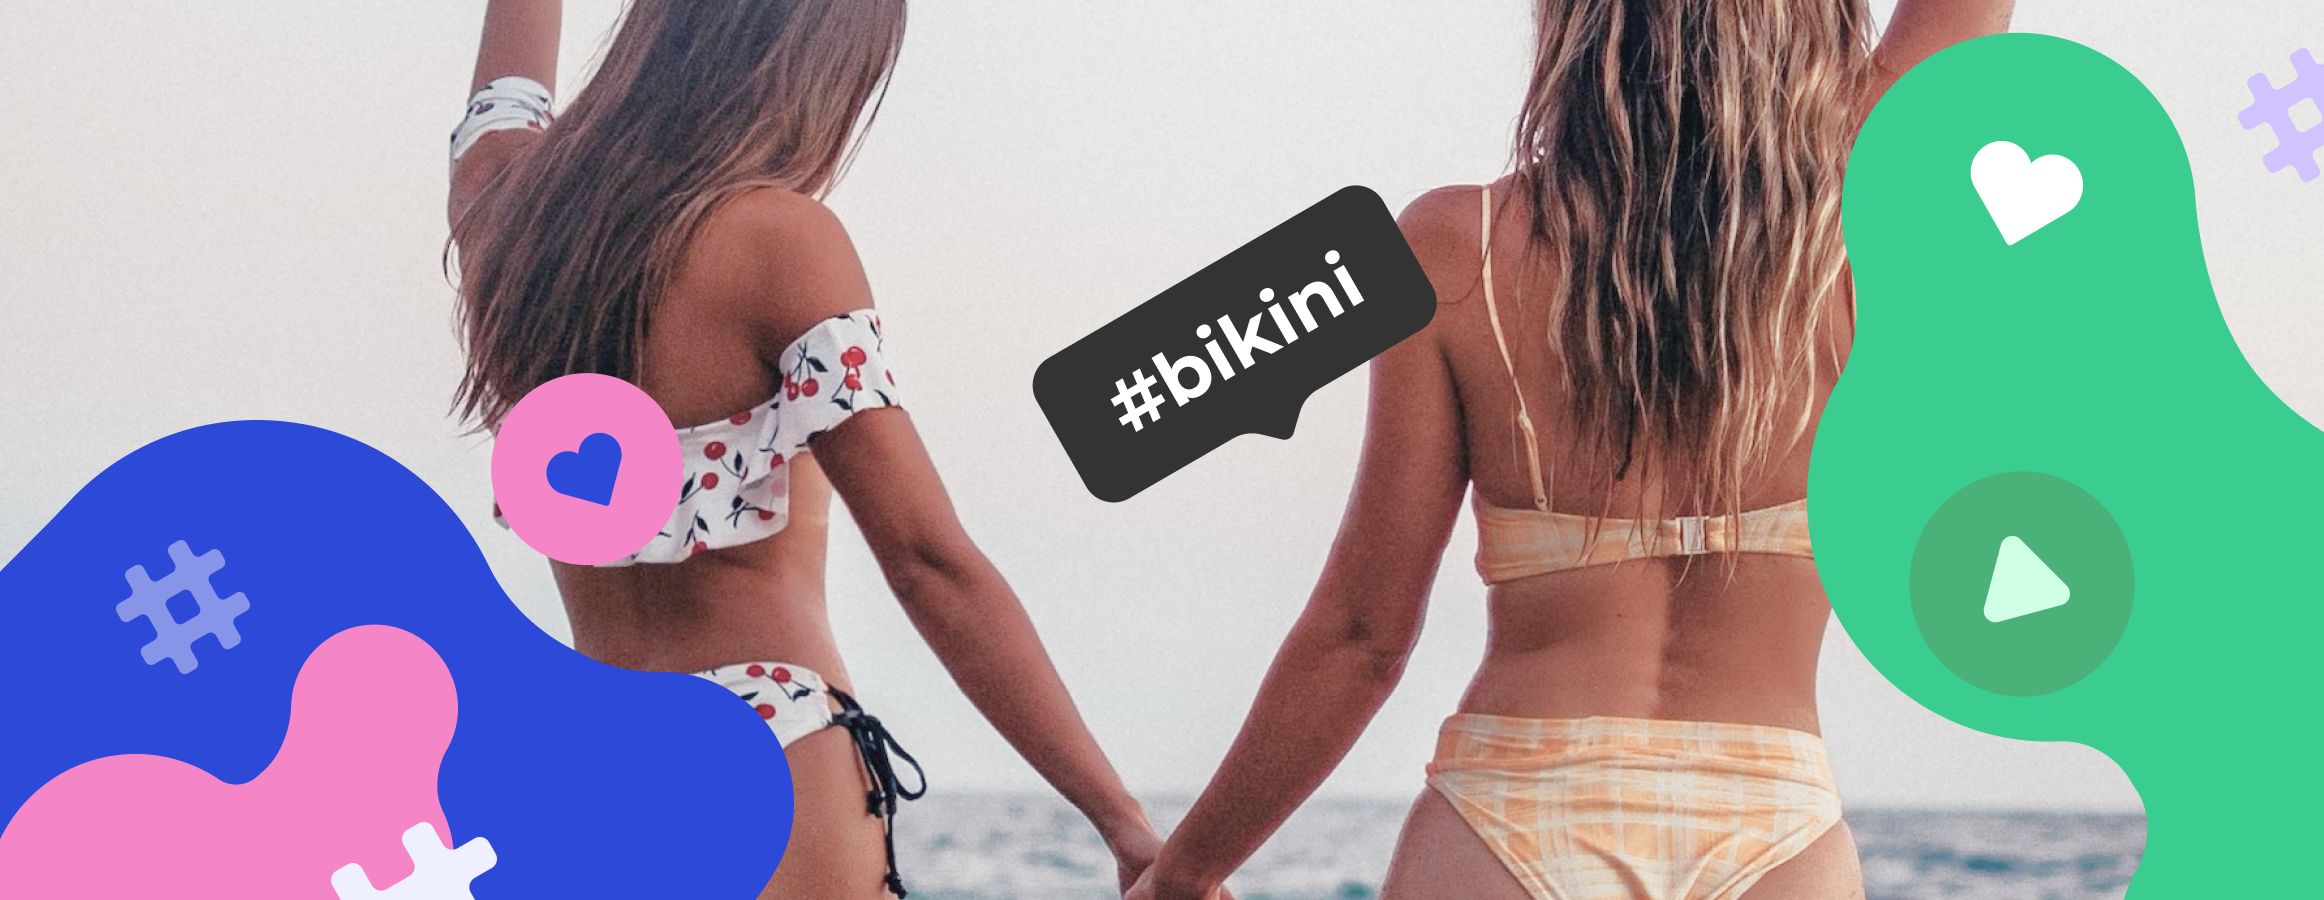 Bikini hashtags